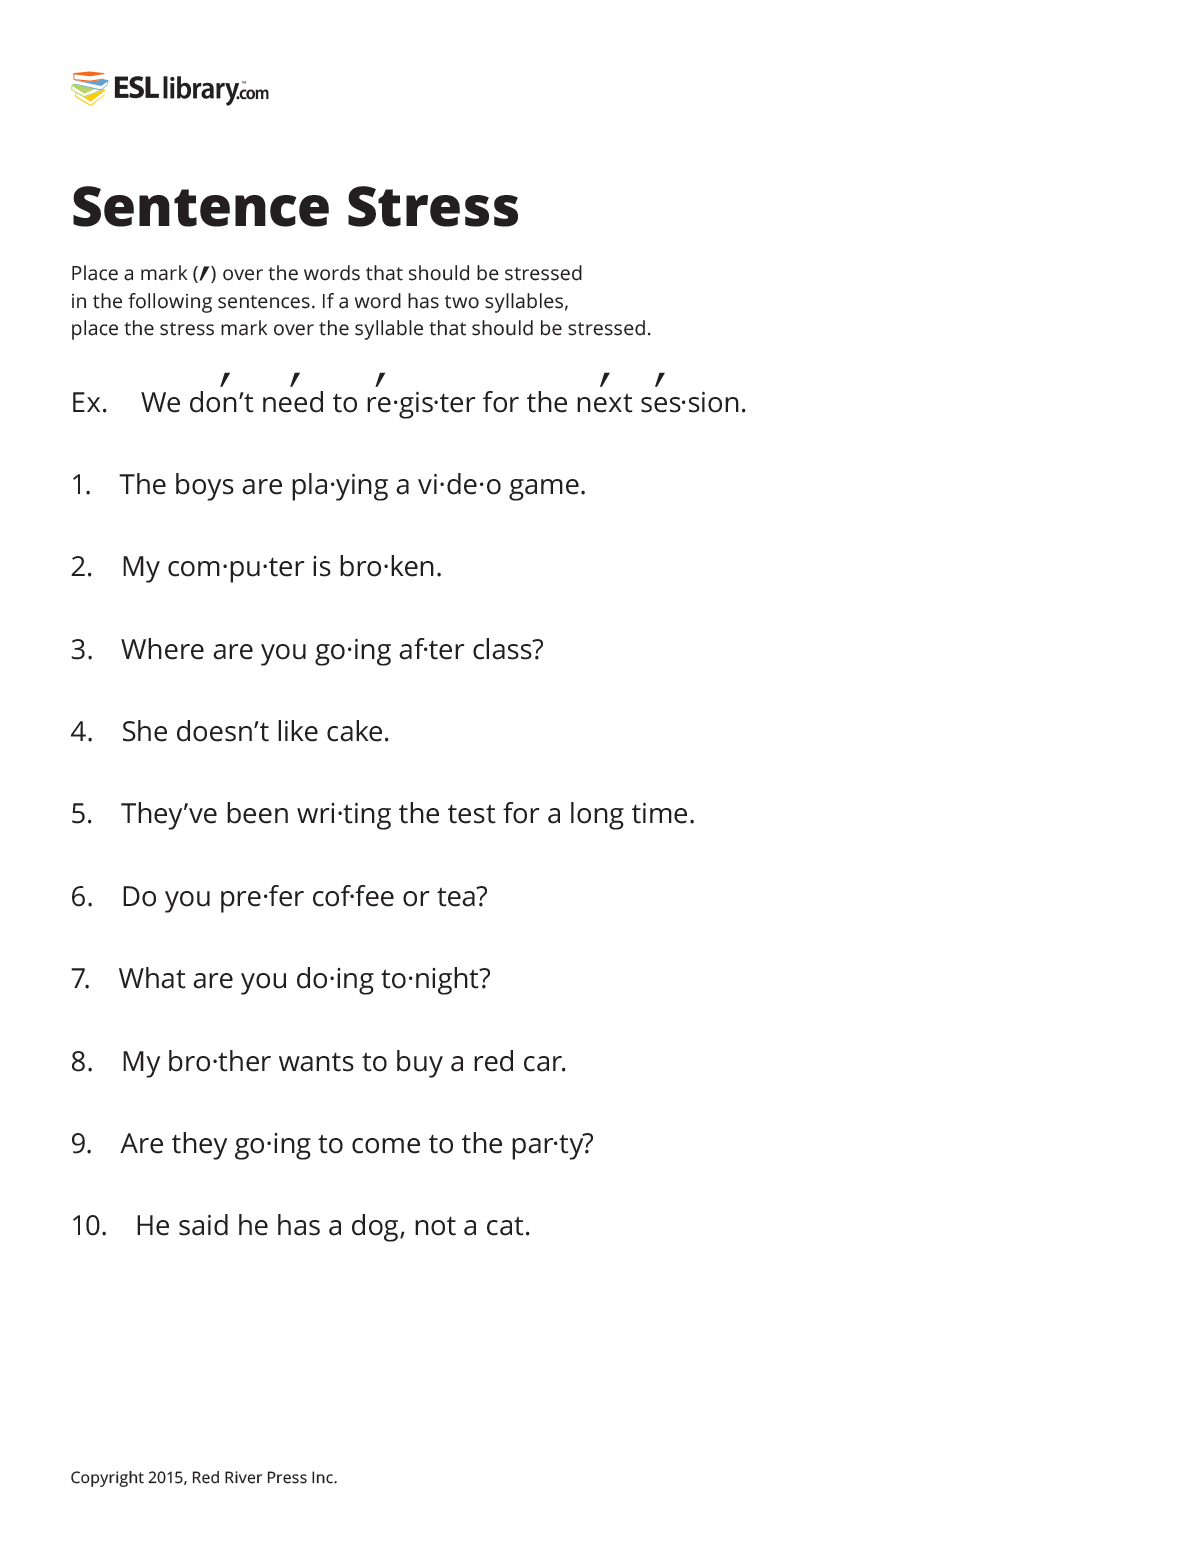 sentence-stress-esl-library-blog